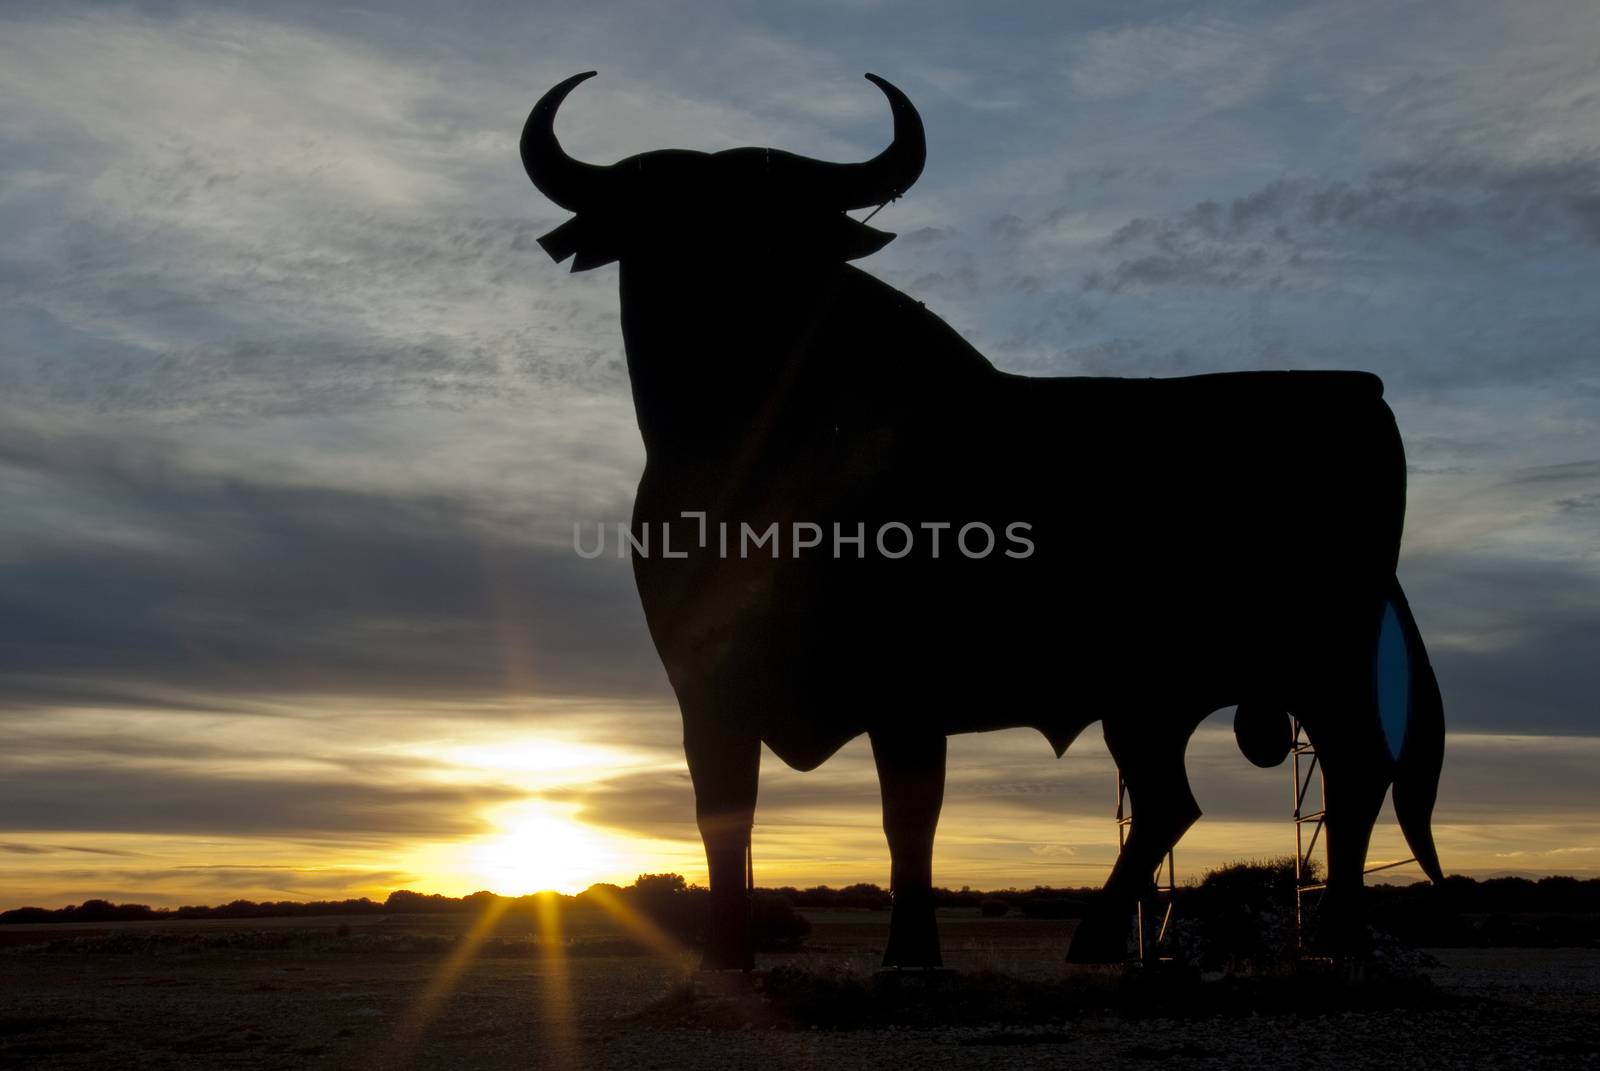 Osborne bull at sunset, Spain by jalonsohu@gmail.com